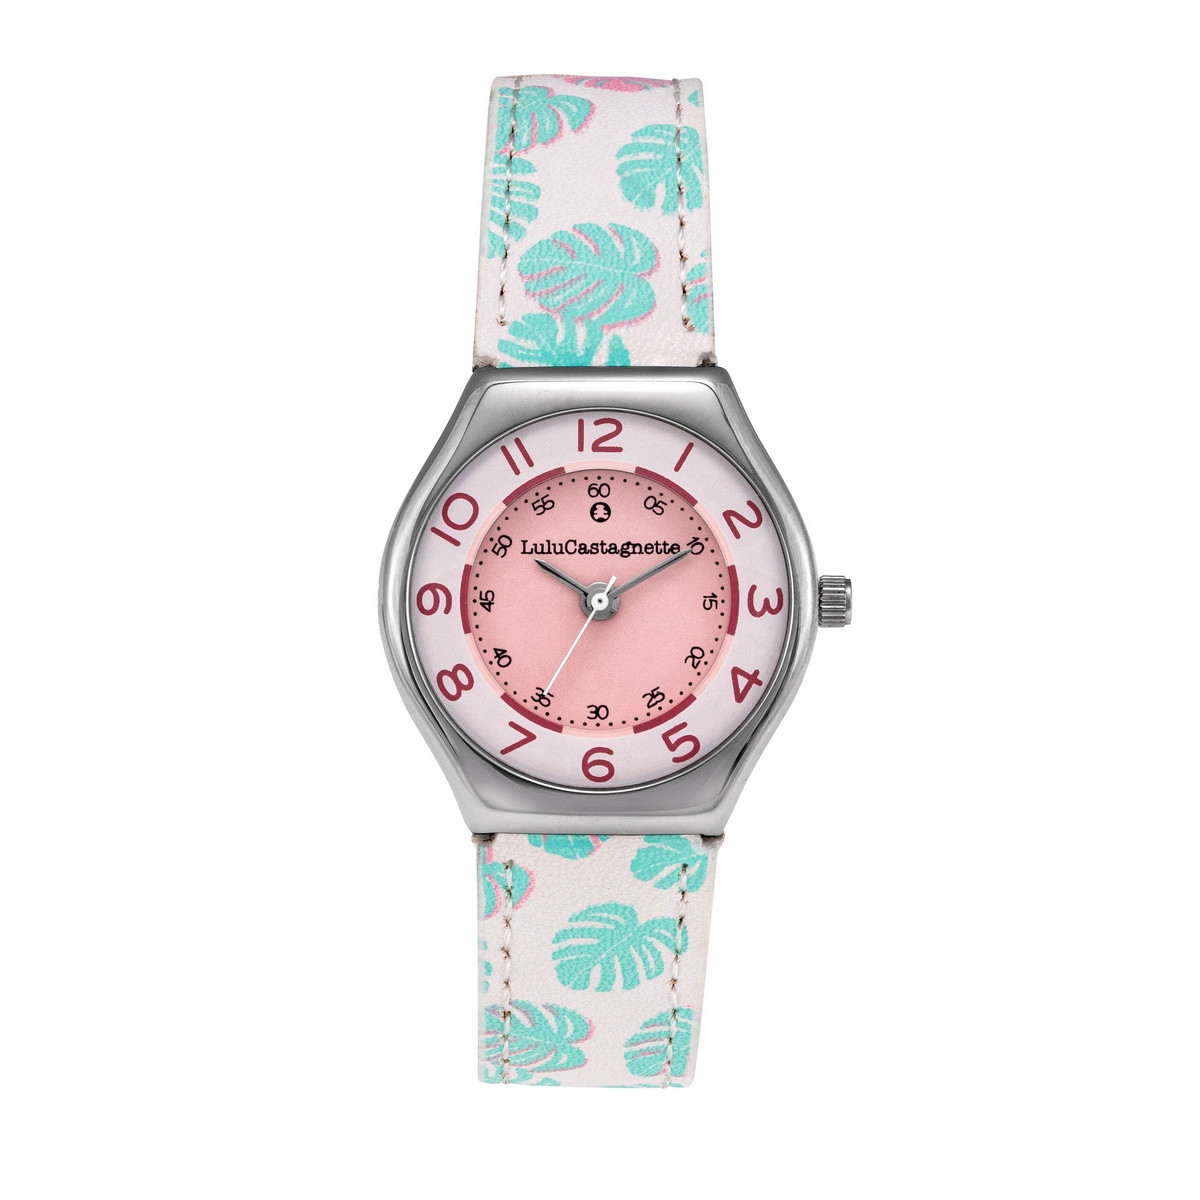 Montre Fille LuluCastagnette - cadran rose - bracelet blanc avec motifs